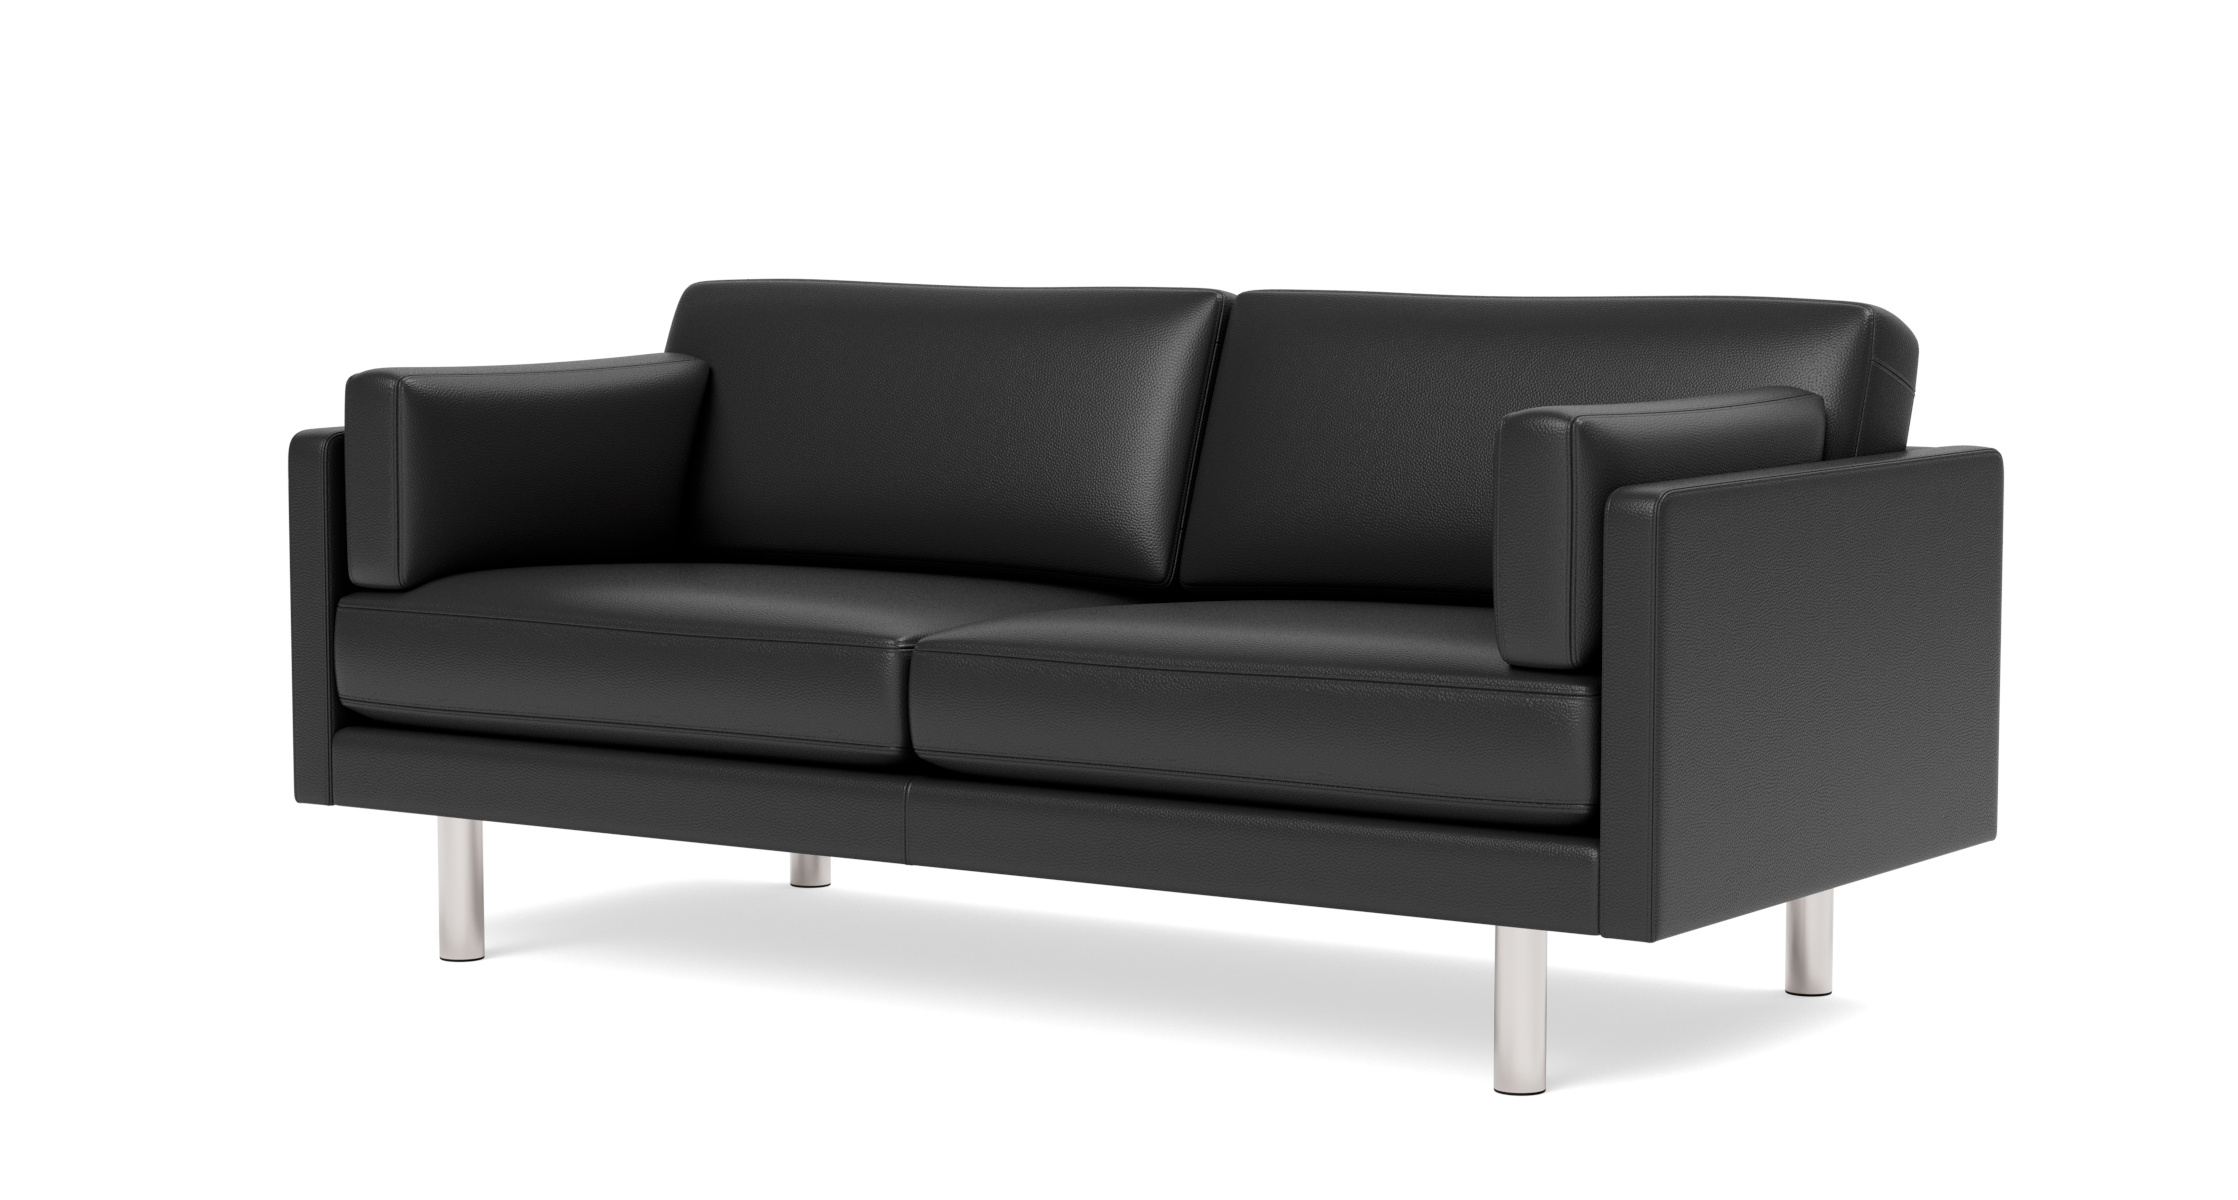 EJ220 Sofa 2-Sitzer, 76 cm, eiche geseift / re-wool 128